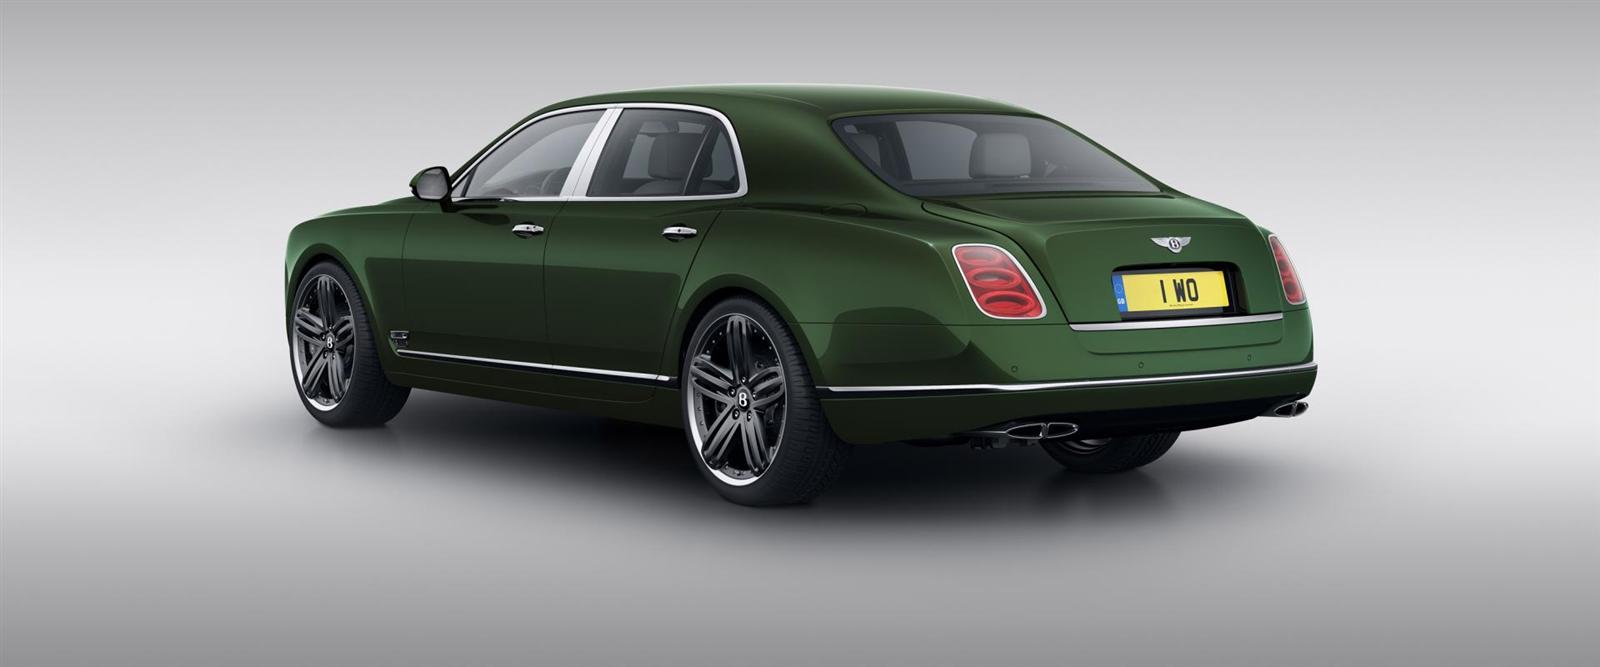 2013 Bentley Mulsanne LeMans Edition